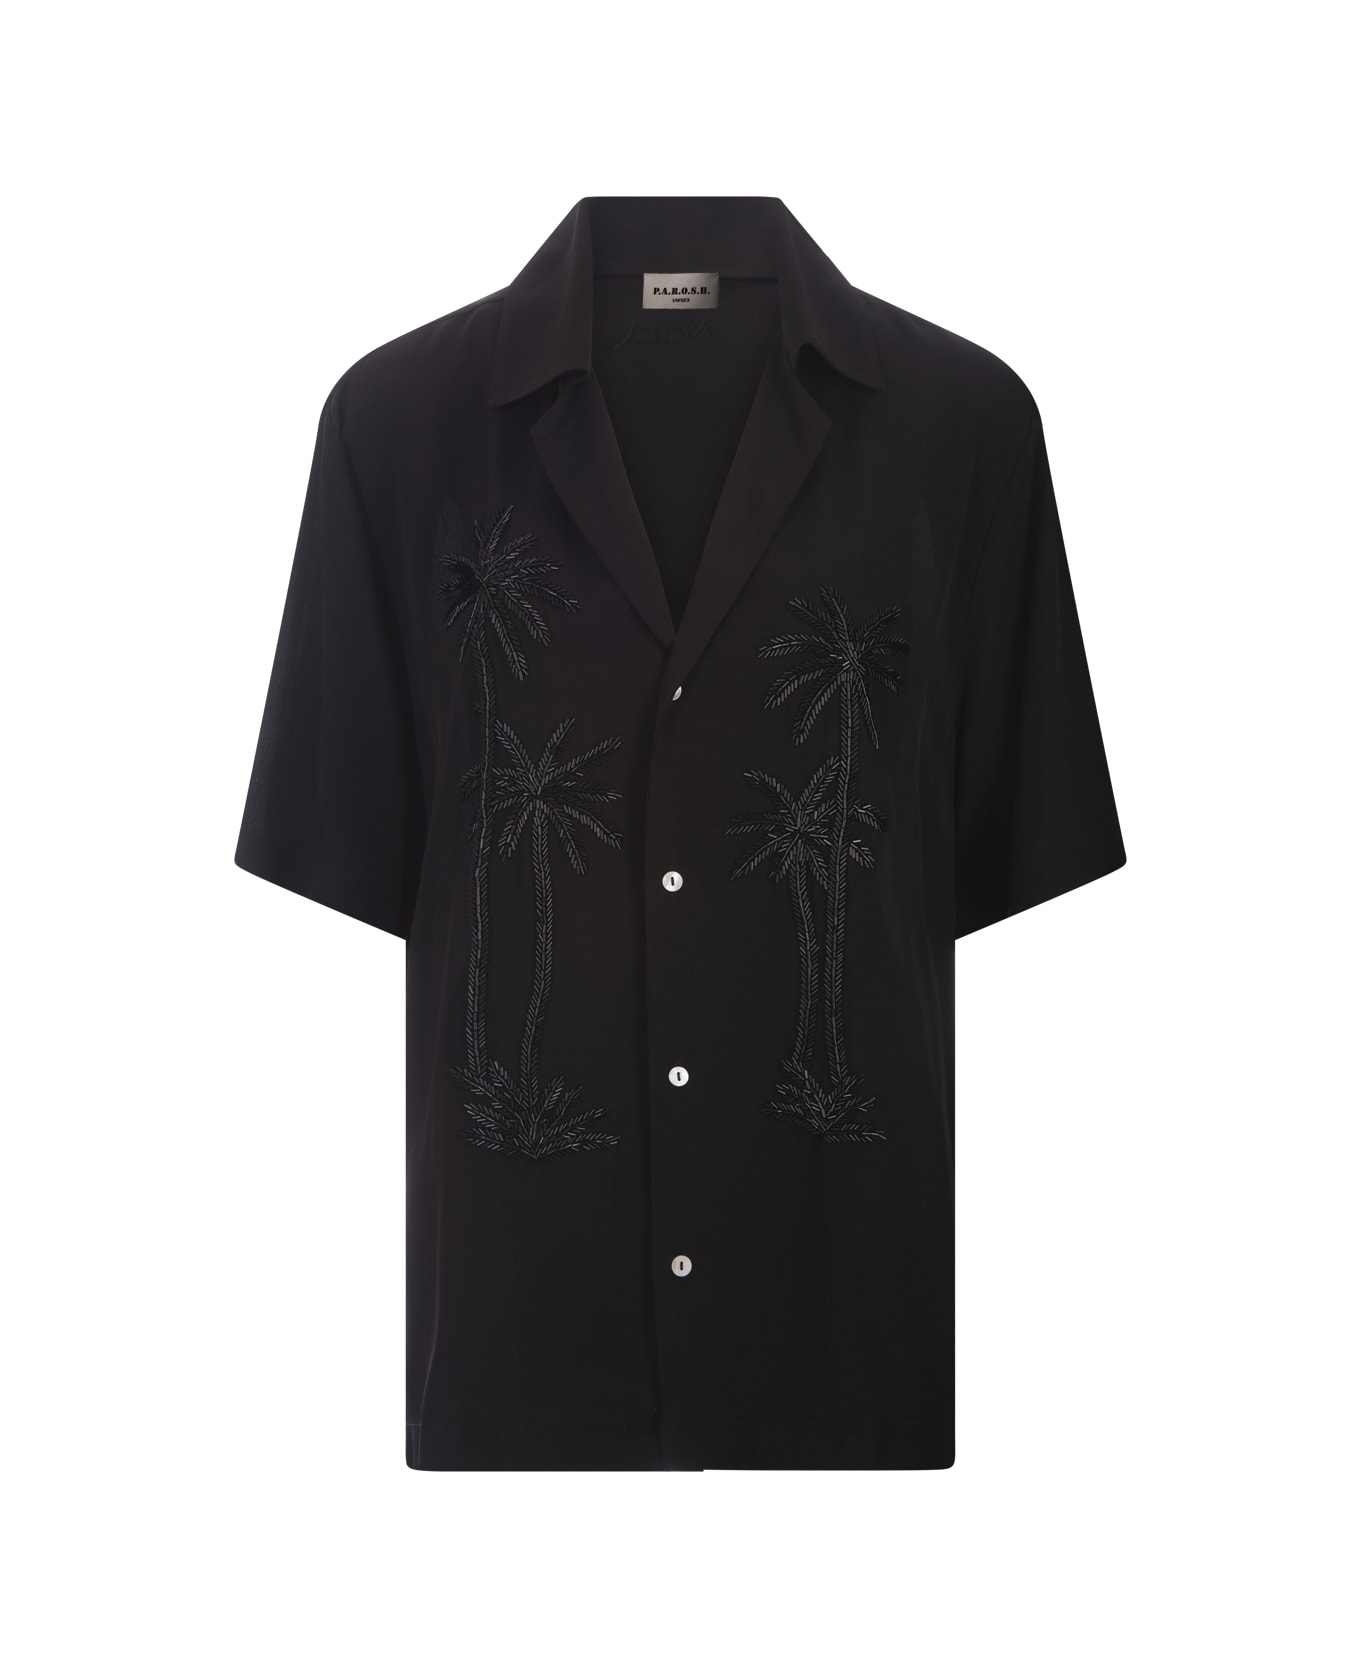 Parosh Black Ralm Shirt With Palm Embroidery - Black